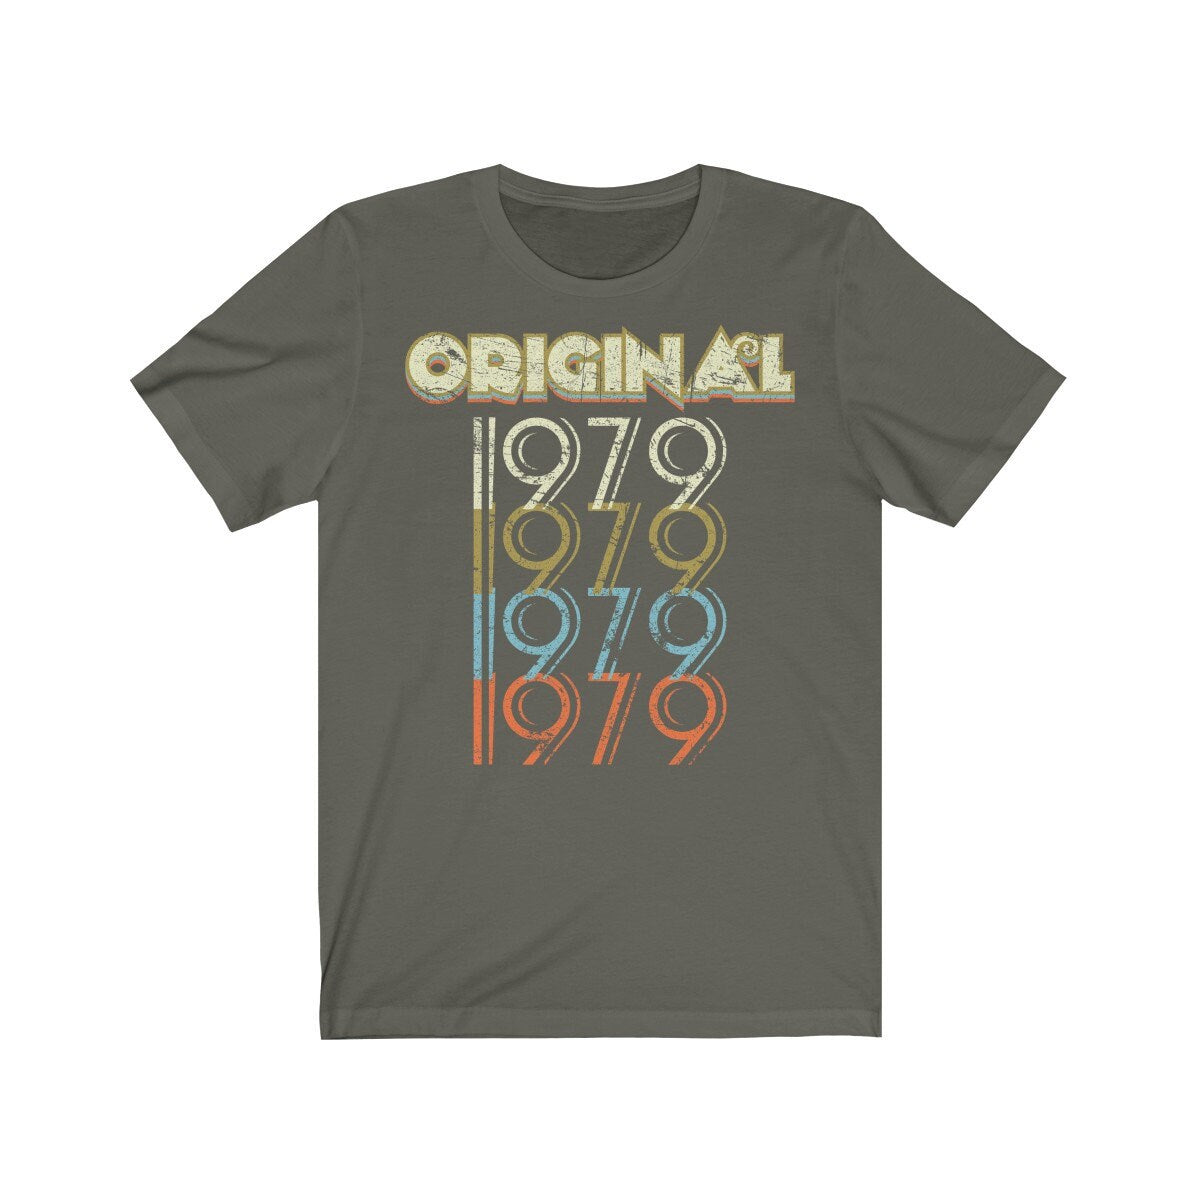 43rd Birthday Gift 'Original 1979' T Shirt for Men or Women Unisex Short Sleeve Retro & Vintage 70s style Tee